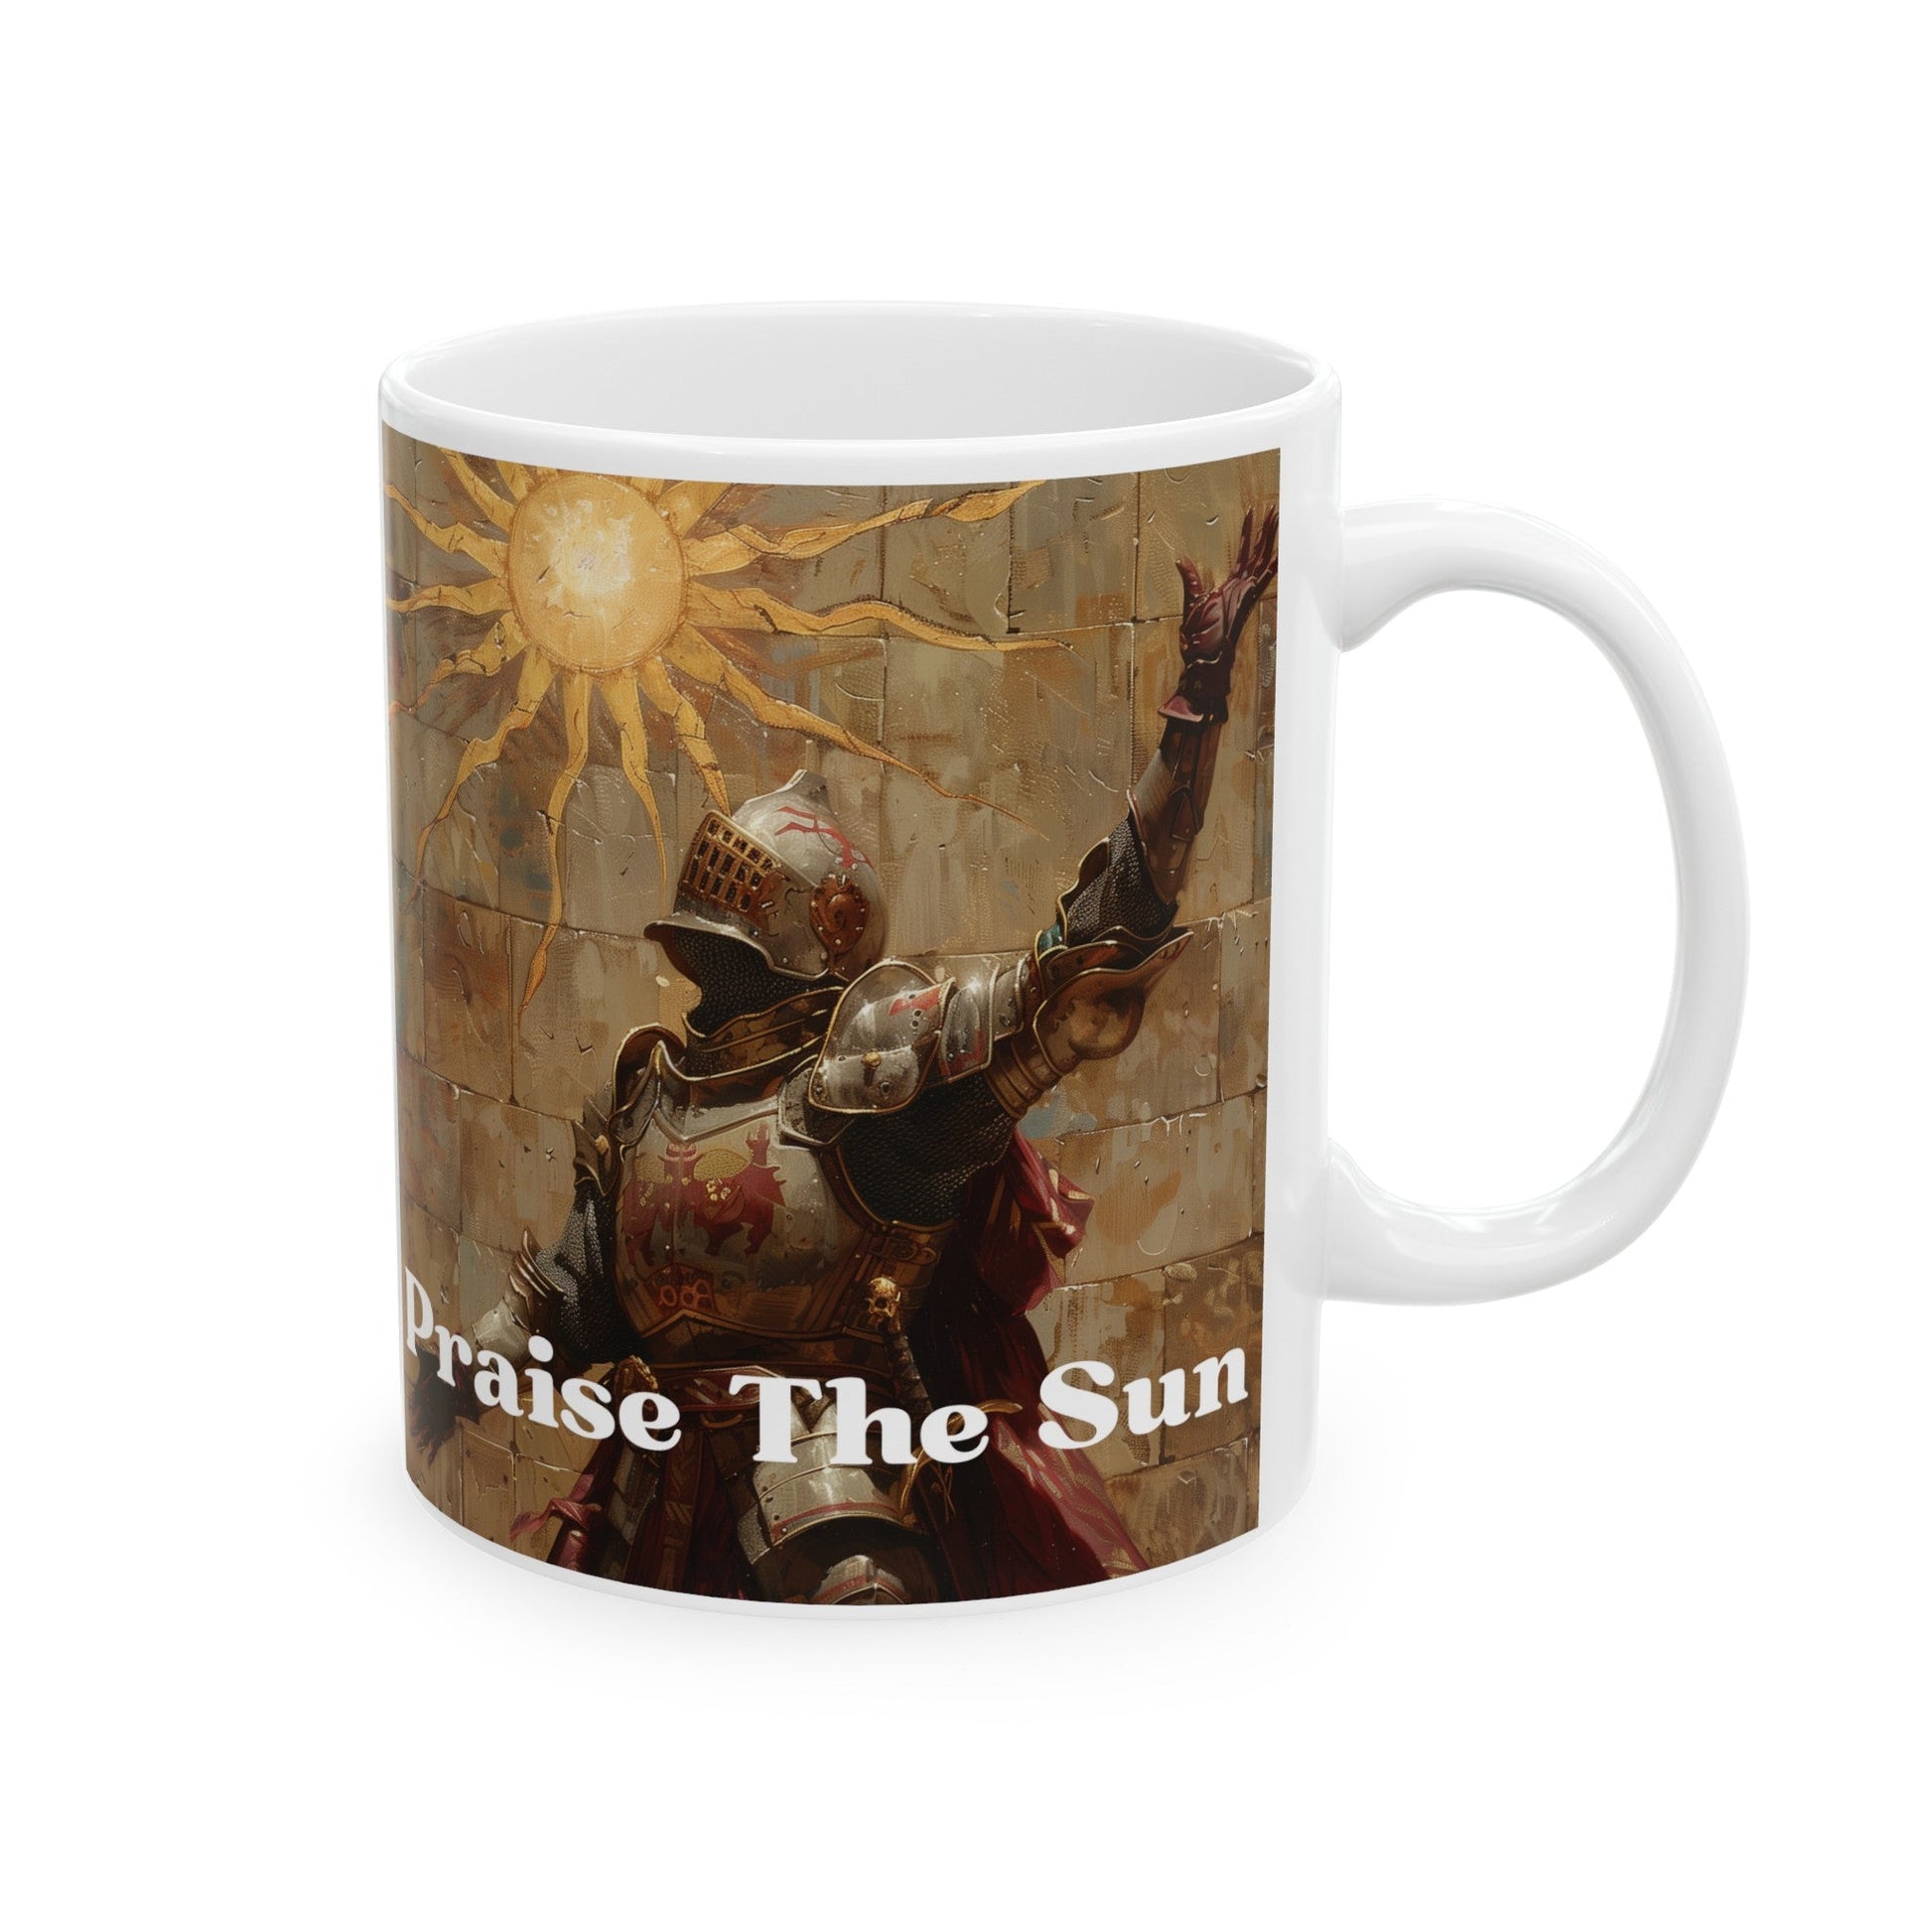 Praise The Sun Coffee Mug. Dark Fantasy Videogame, Solaire Of Astora, Gamer Dark Souls & Elden Ring Inspired, (11oz, 15oz) - Moikas